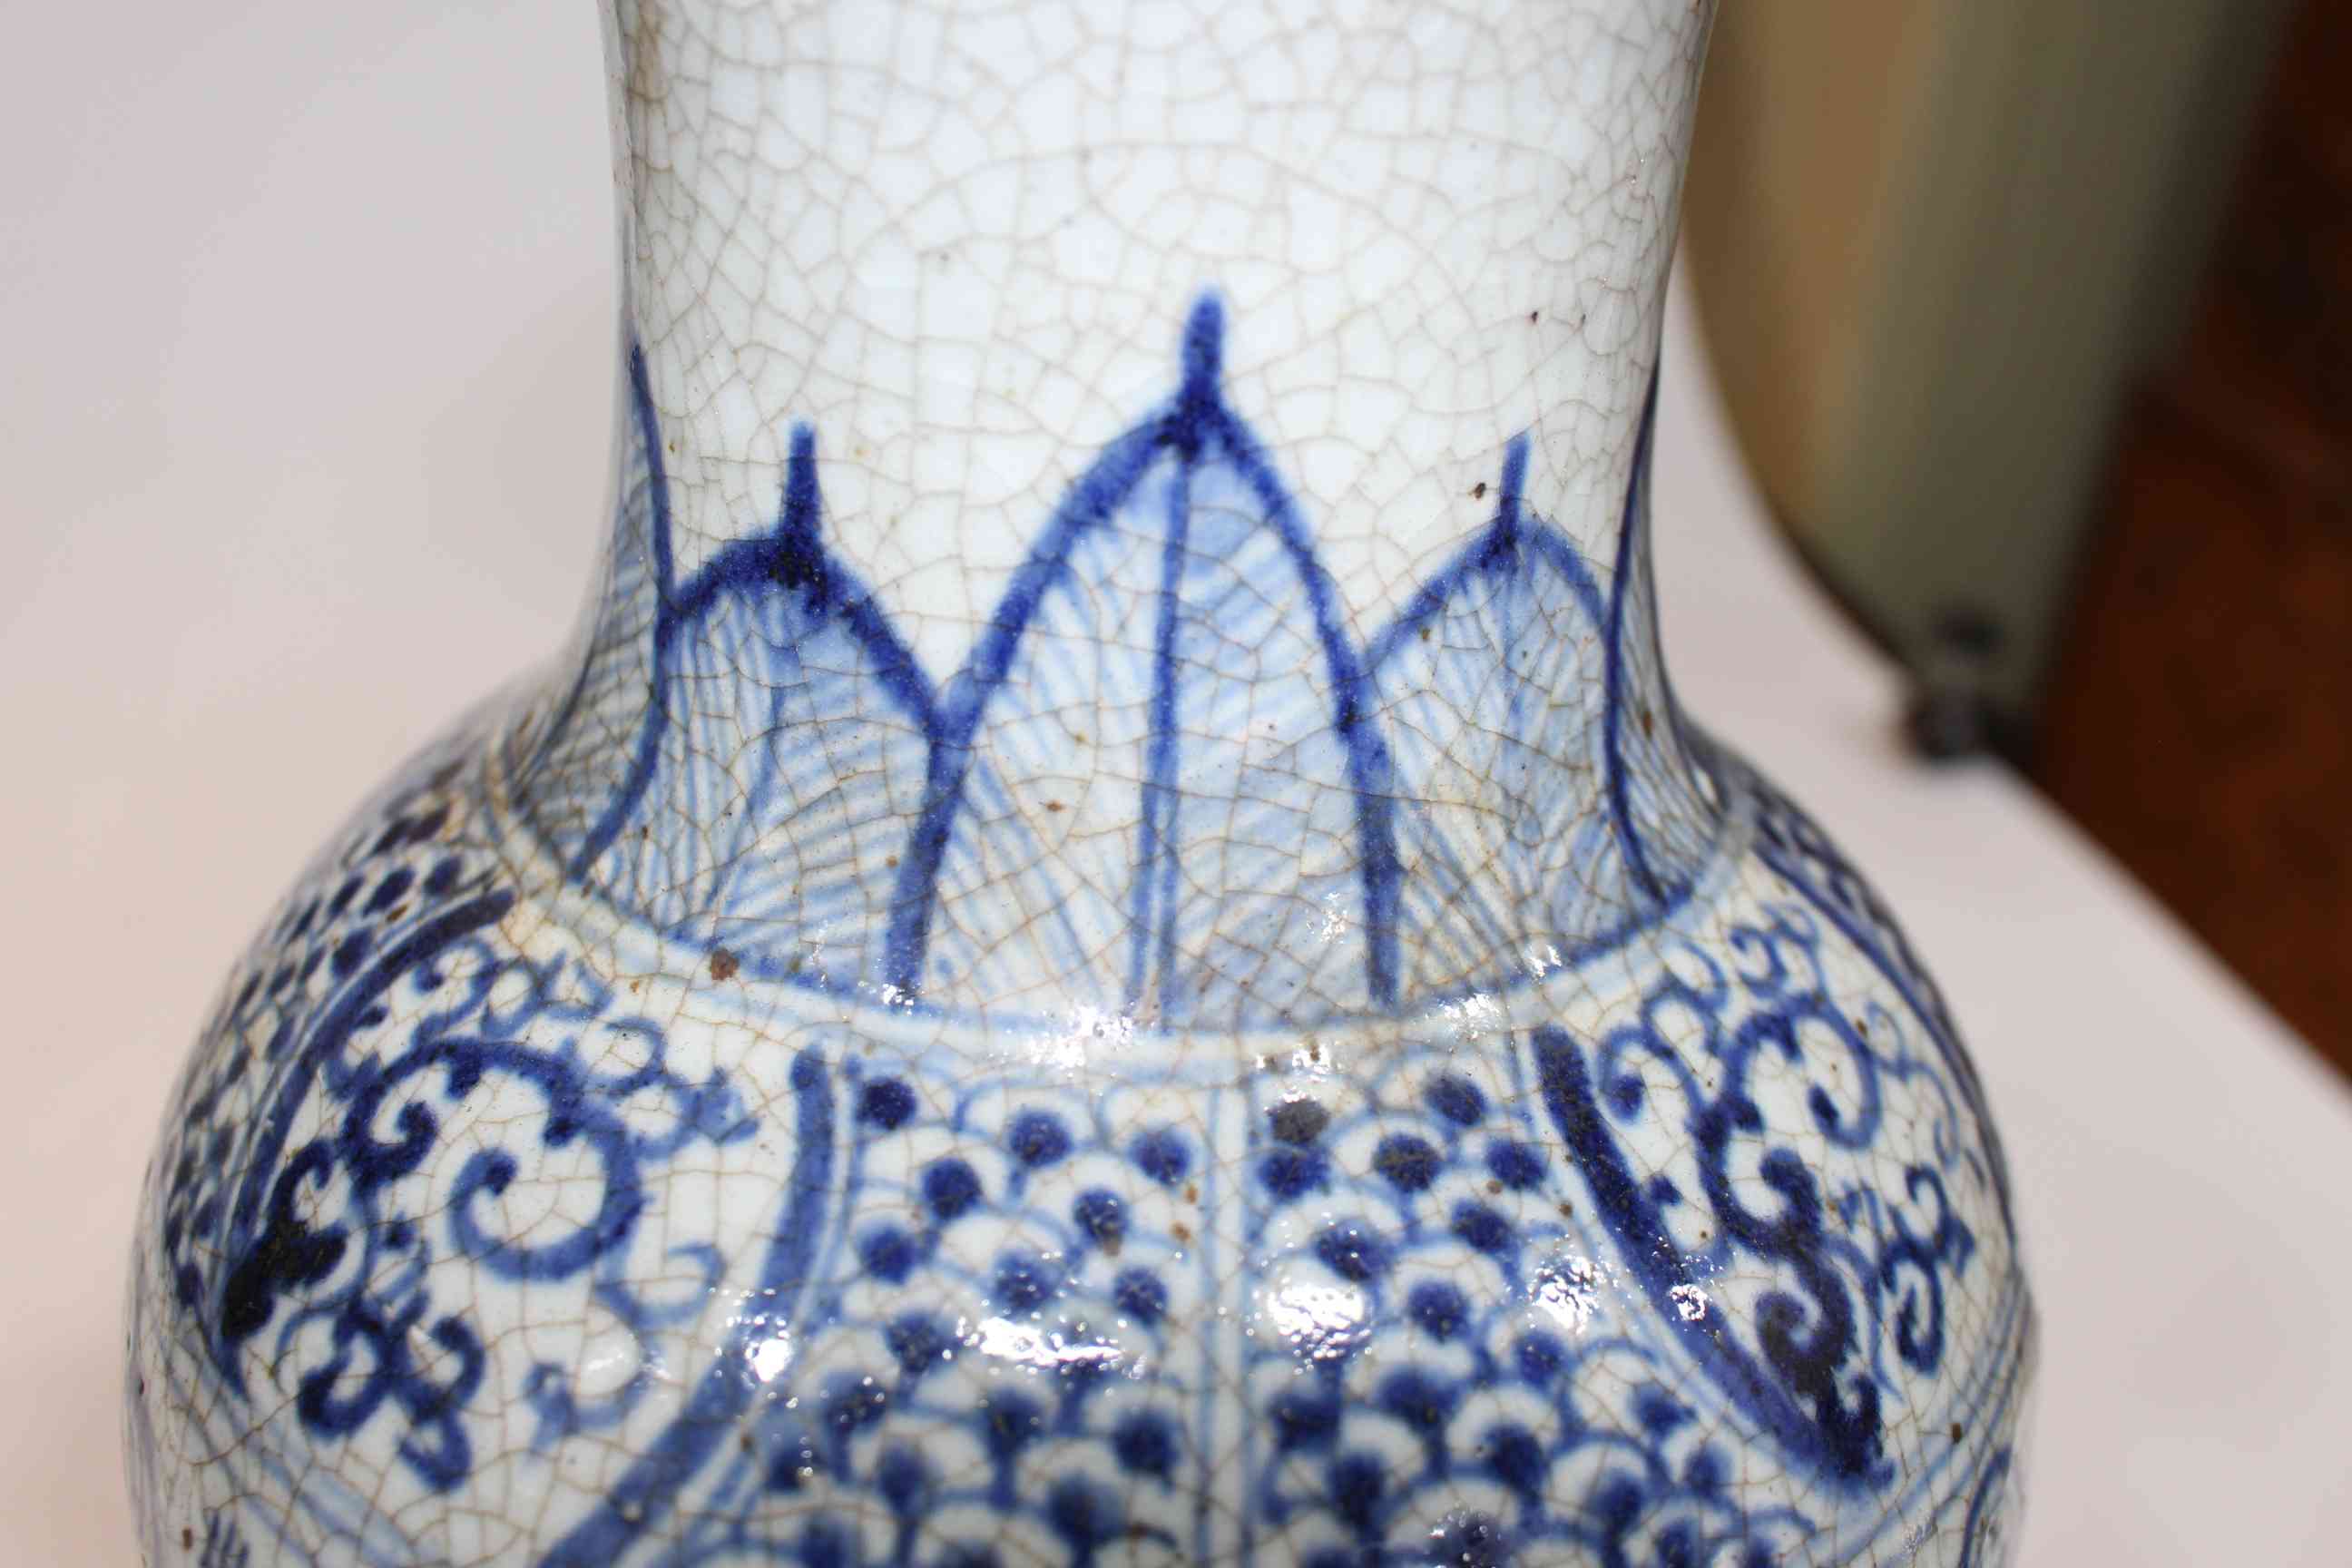 Chinese crackle glaze blue and white baluster vase, 40cm high. - Image 5 of 5